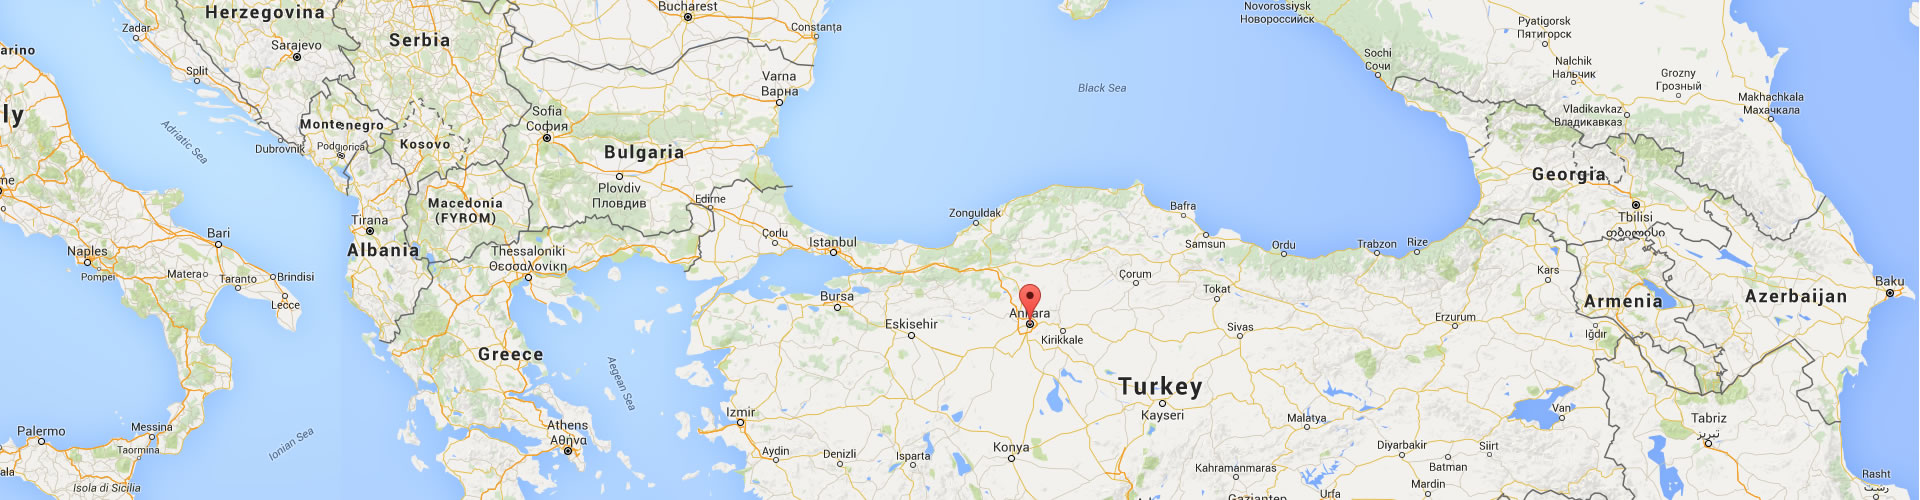 ankara turkiye haritasi